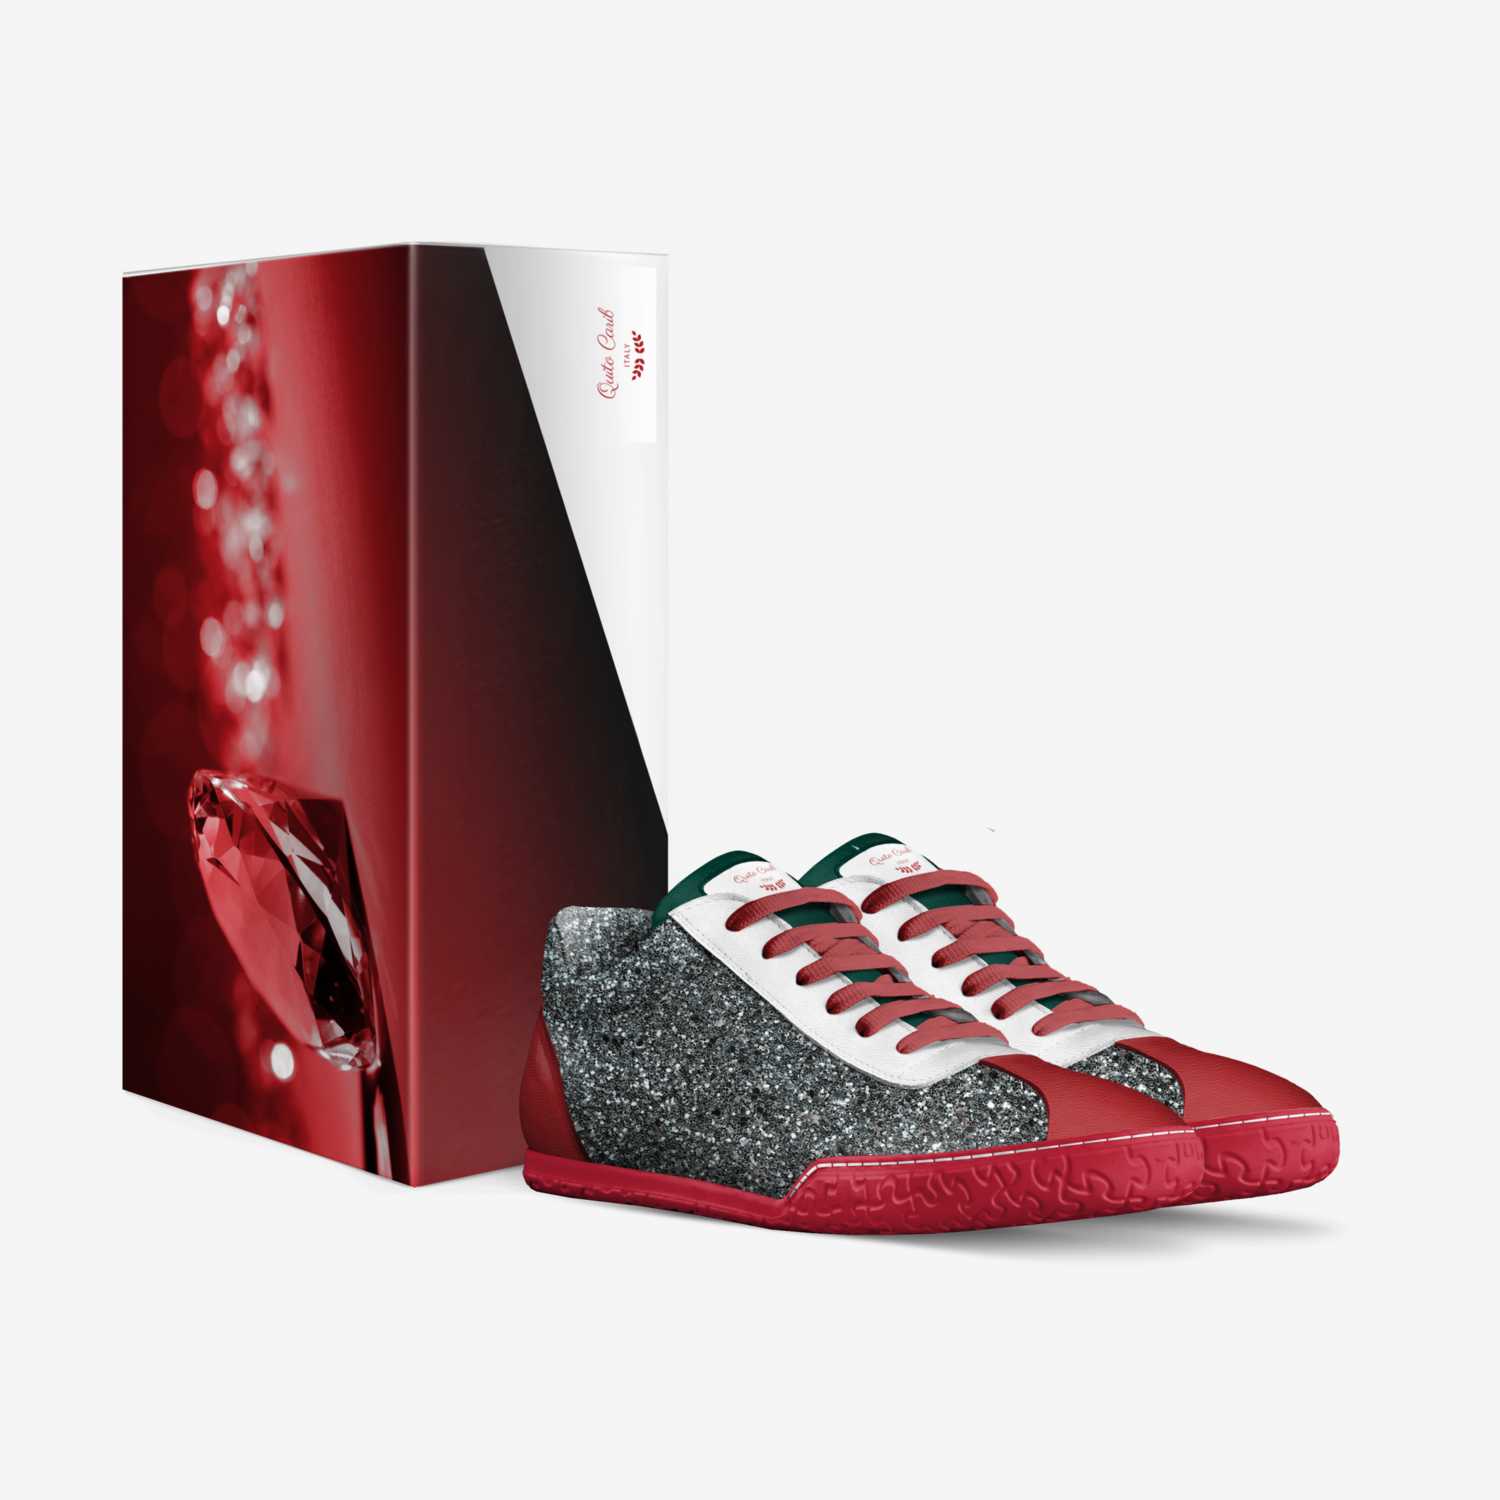 Quito Carib custom made in Italy shoes by M Ramirez Deheywood | Box view